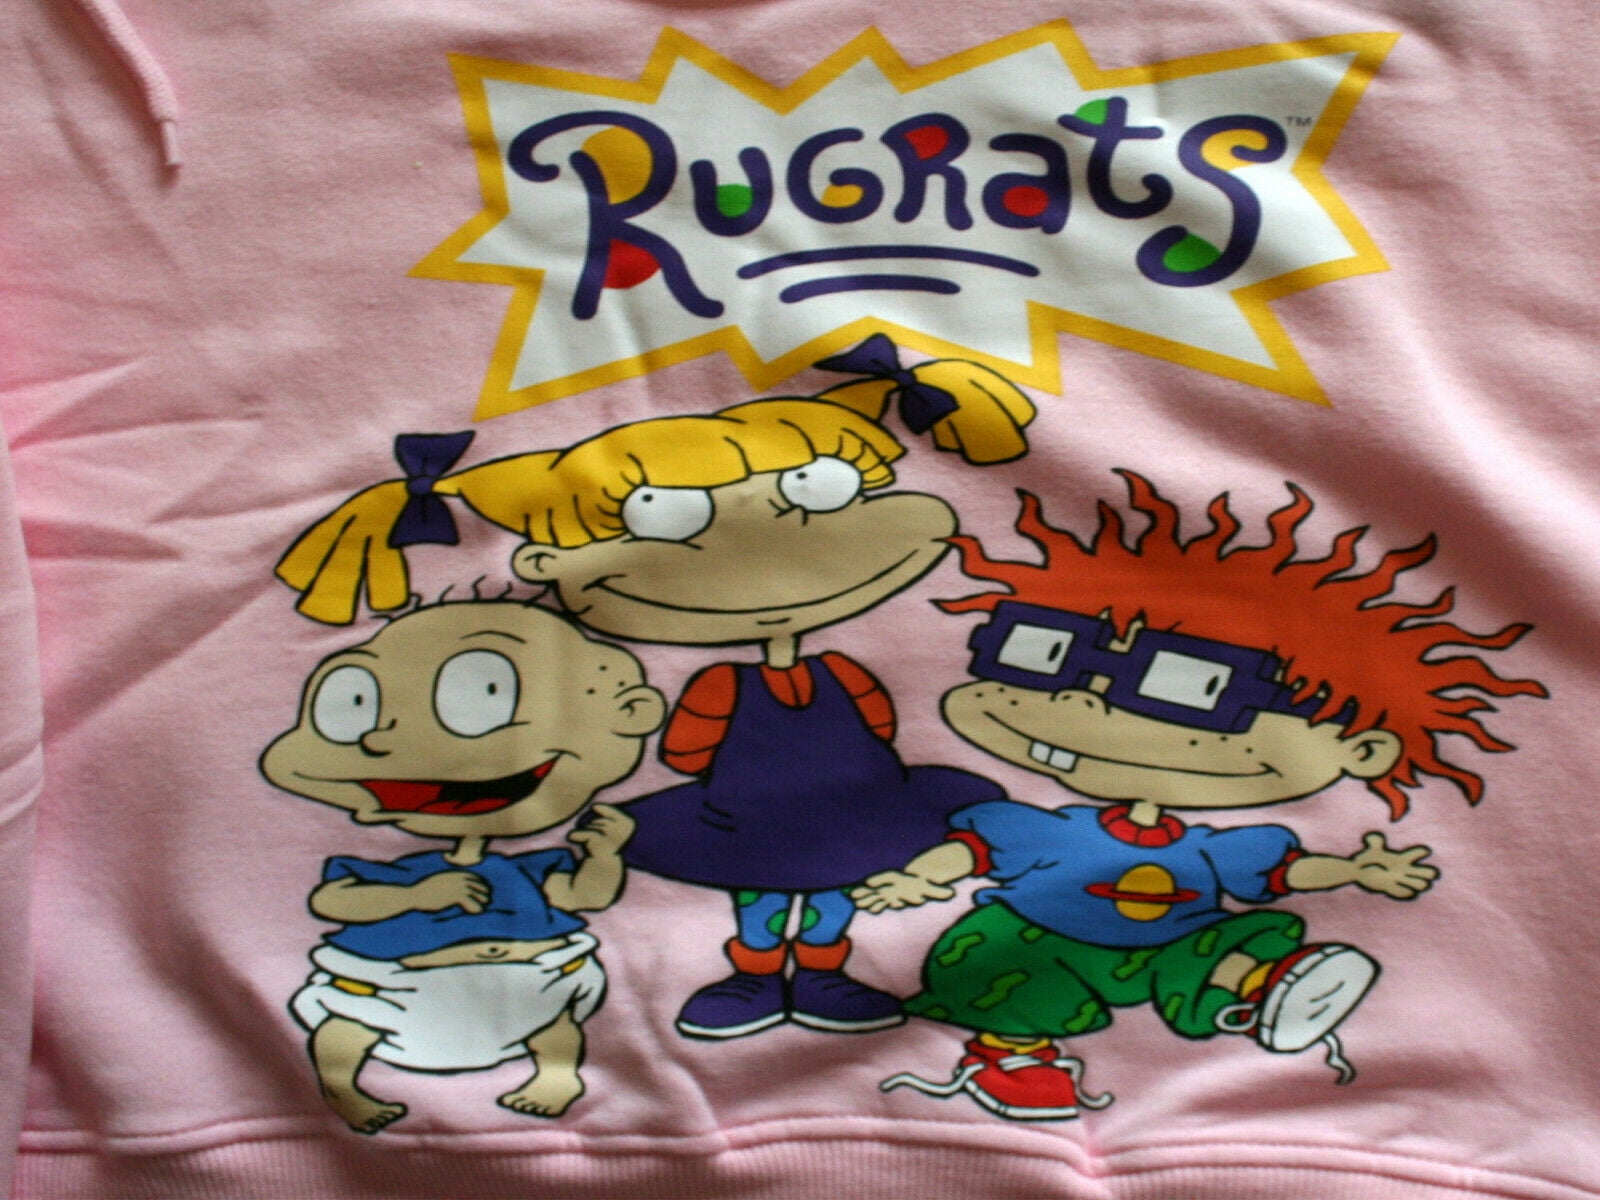 Rugrats Chuckie Choose Kindness Girls Slouchy Sweatshirt - PINK